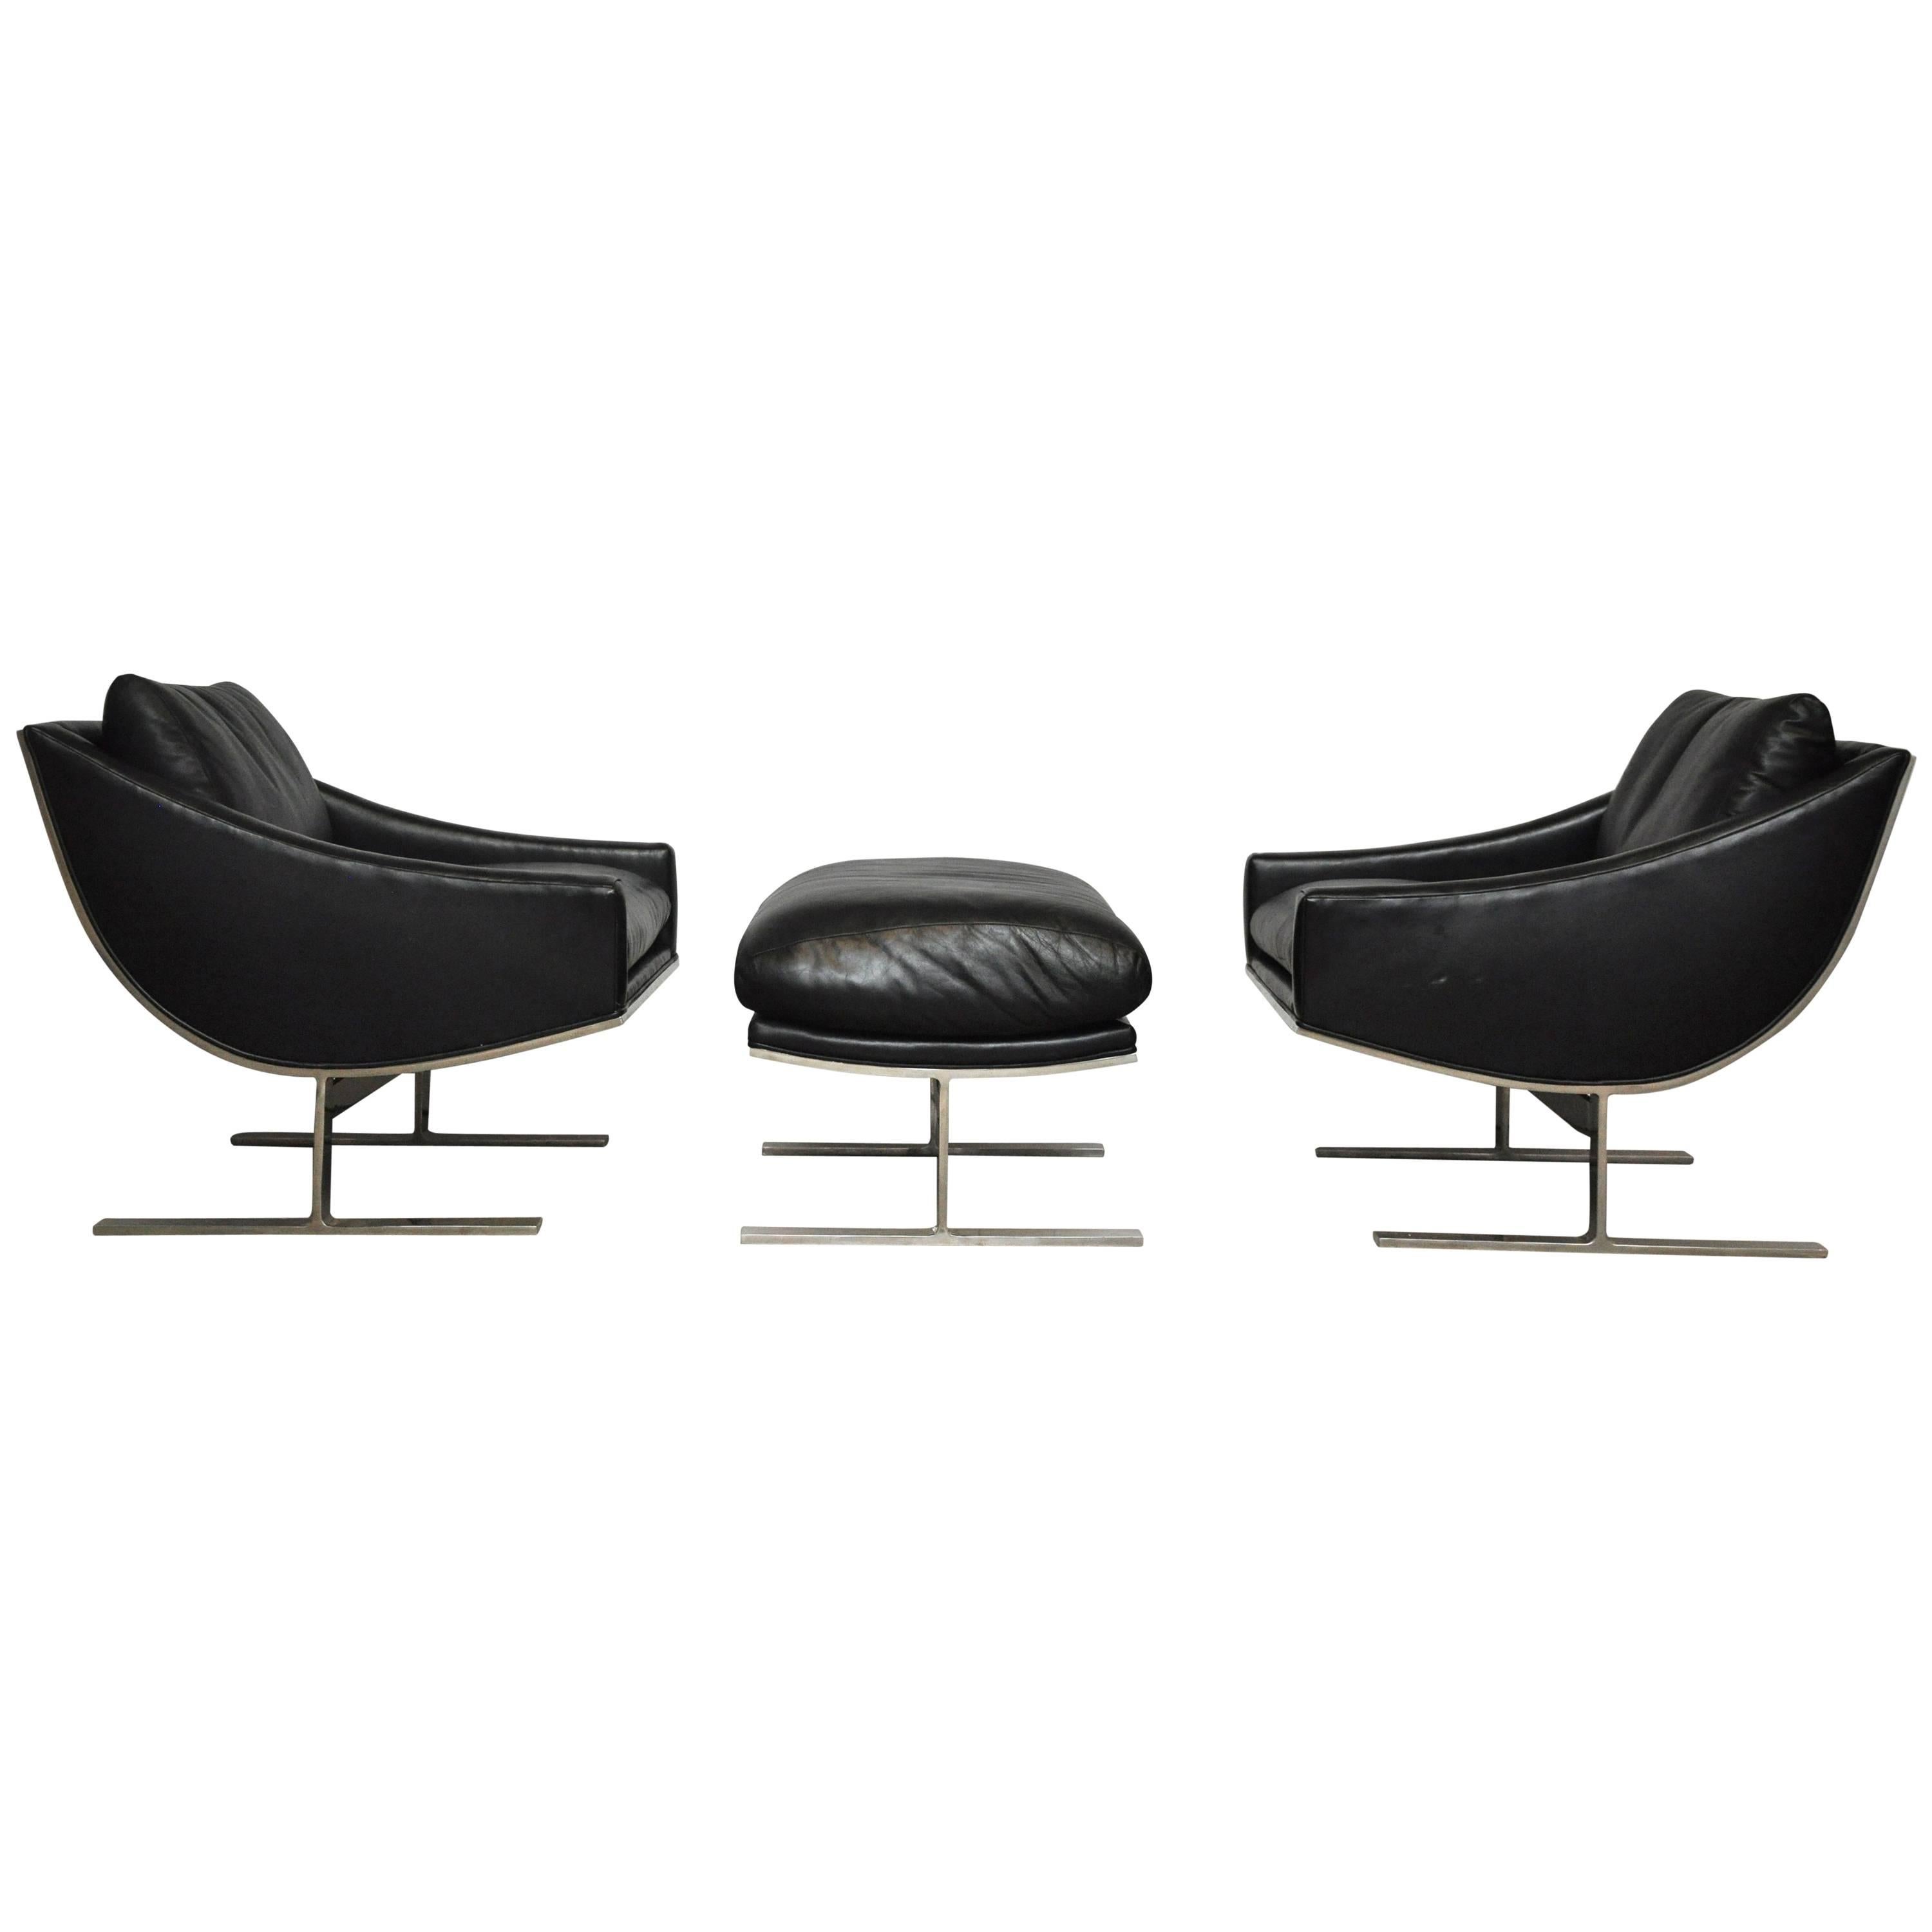 Kipp Stewart "Arc Lounge Chairs" for Directional